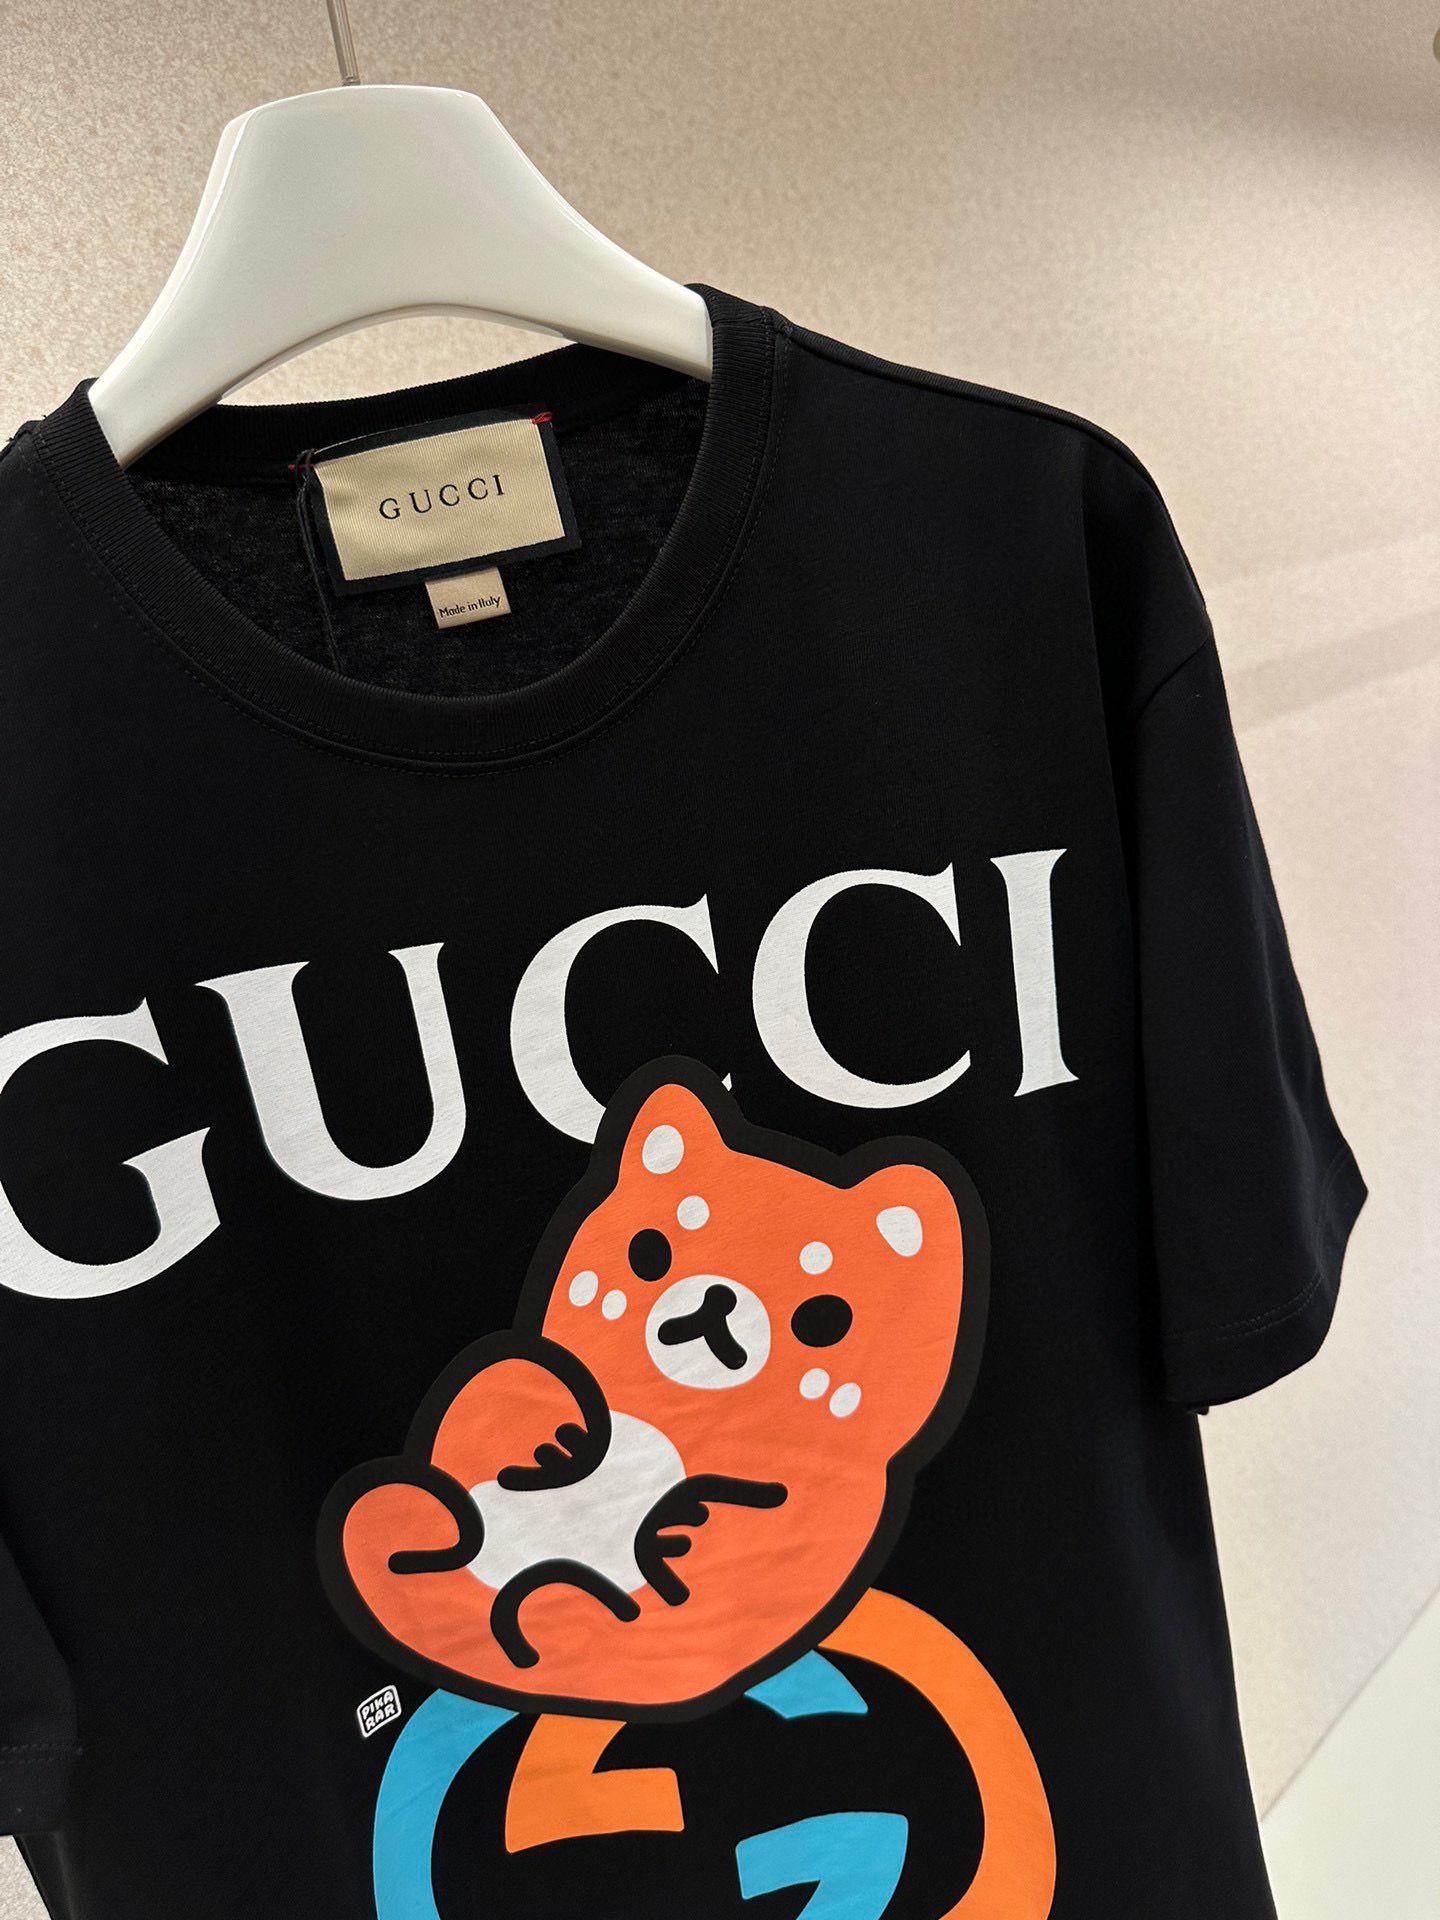 gucci-animal-print-cotton-t-shirt-7153_16845017624-1000